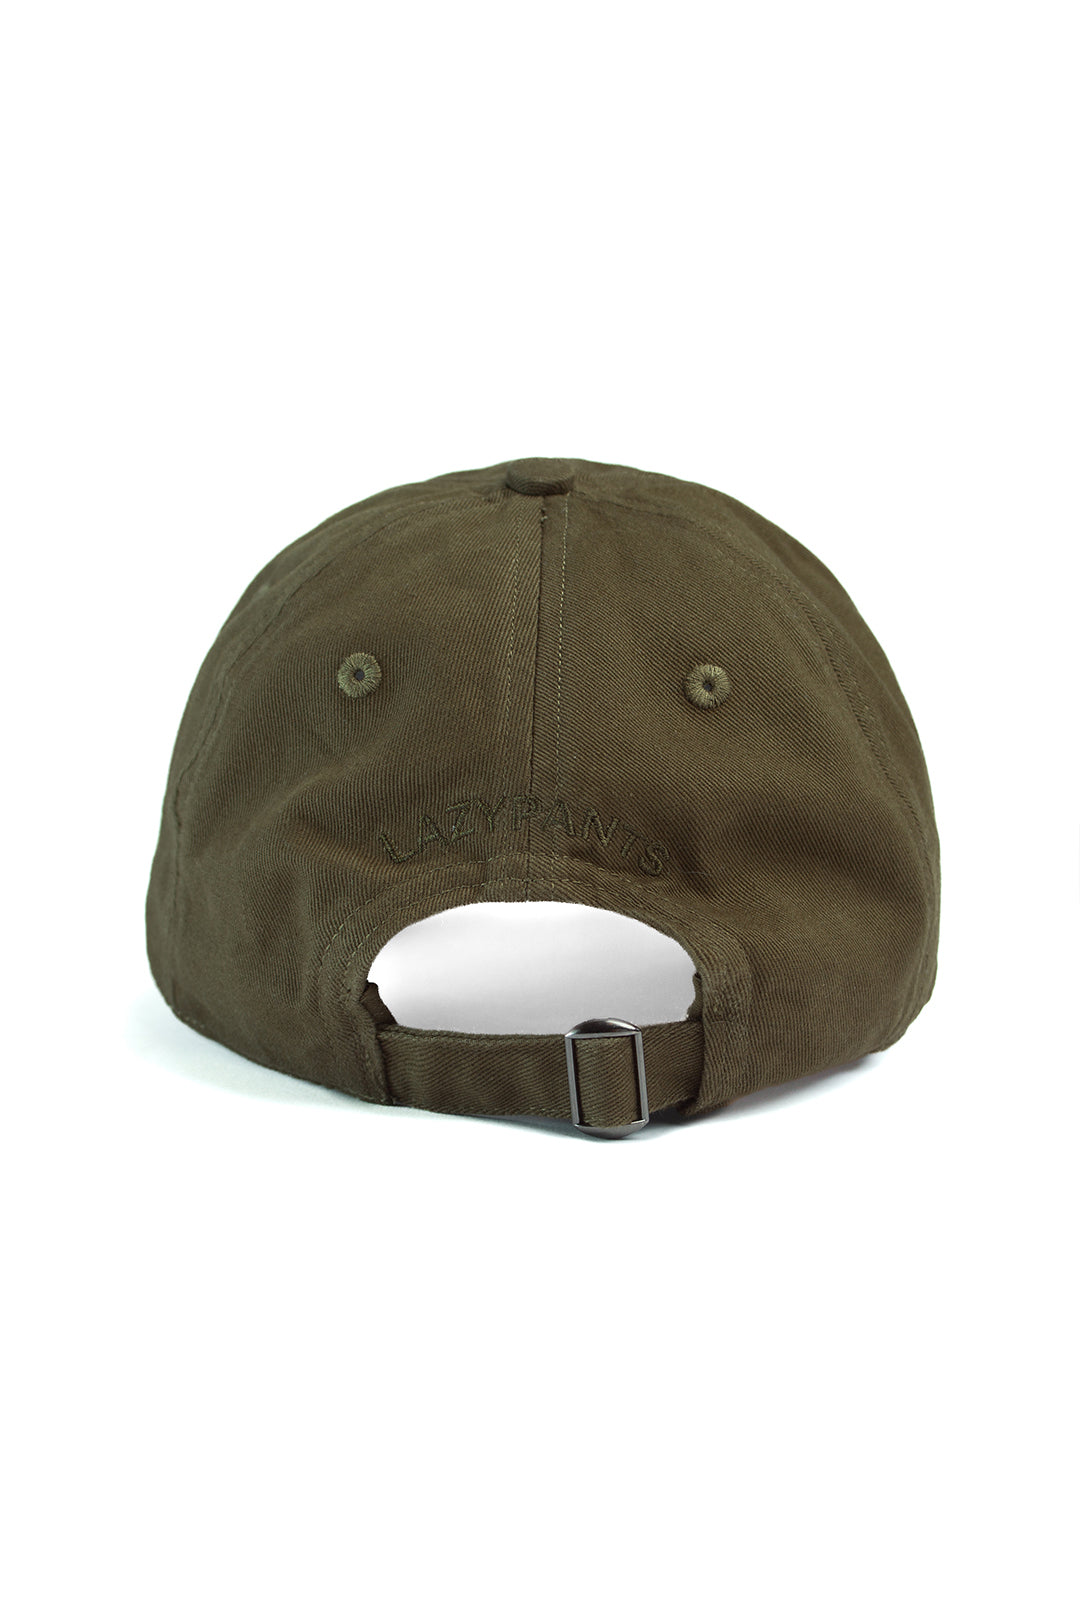 Washed cotton twill dad’s baseball cap in khaki green